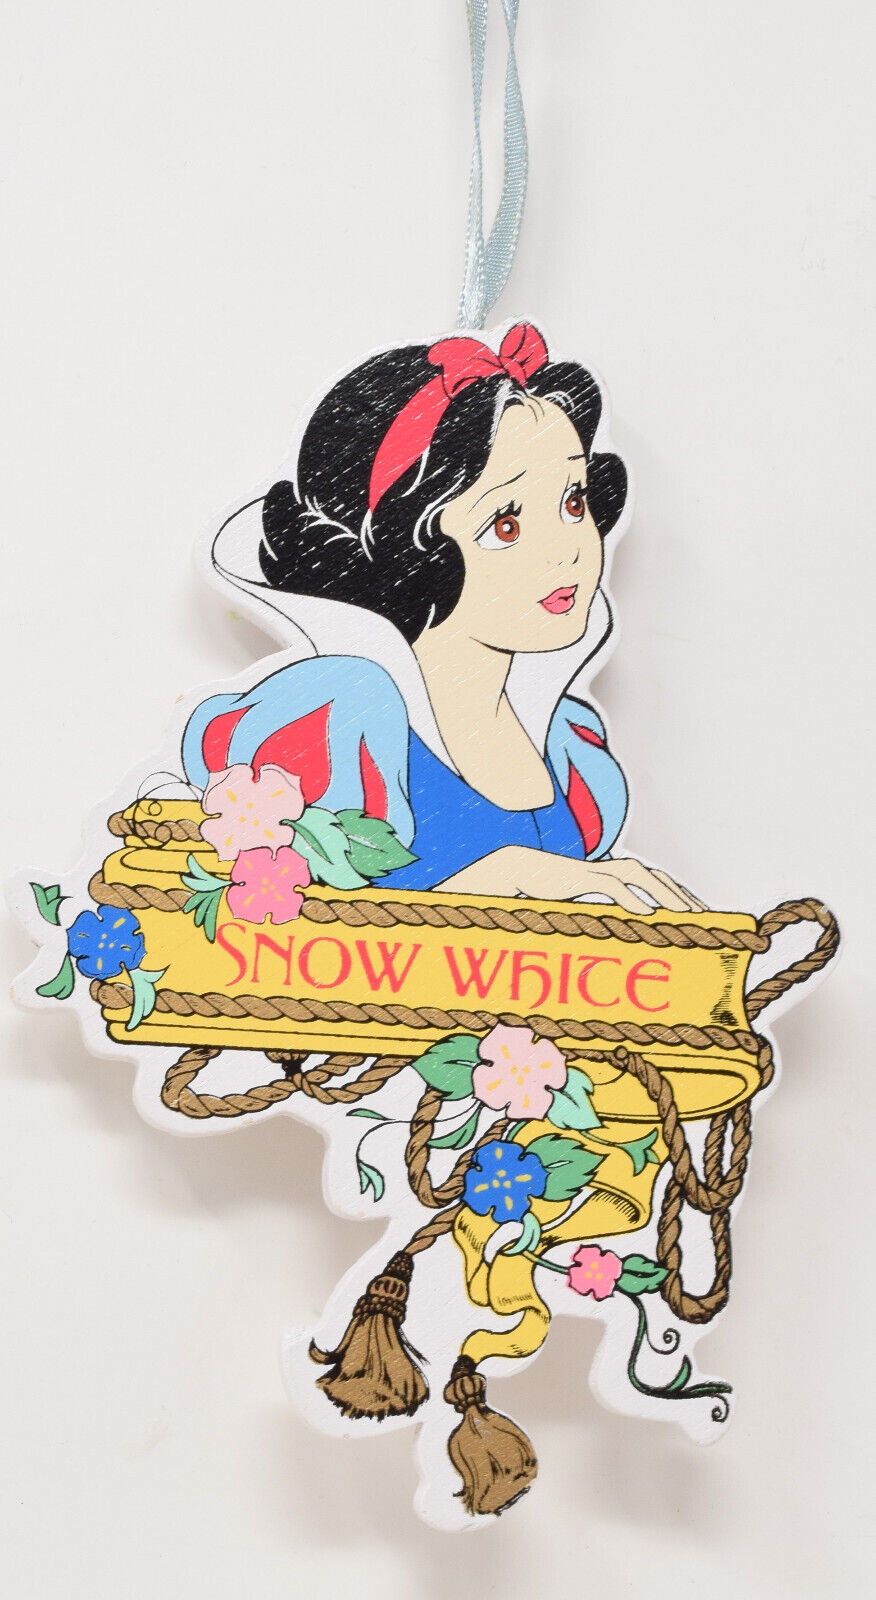 Primary image for Disney Kurt S. Adler Handcrafted Snow White Christmas Ornament